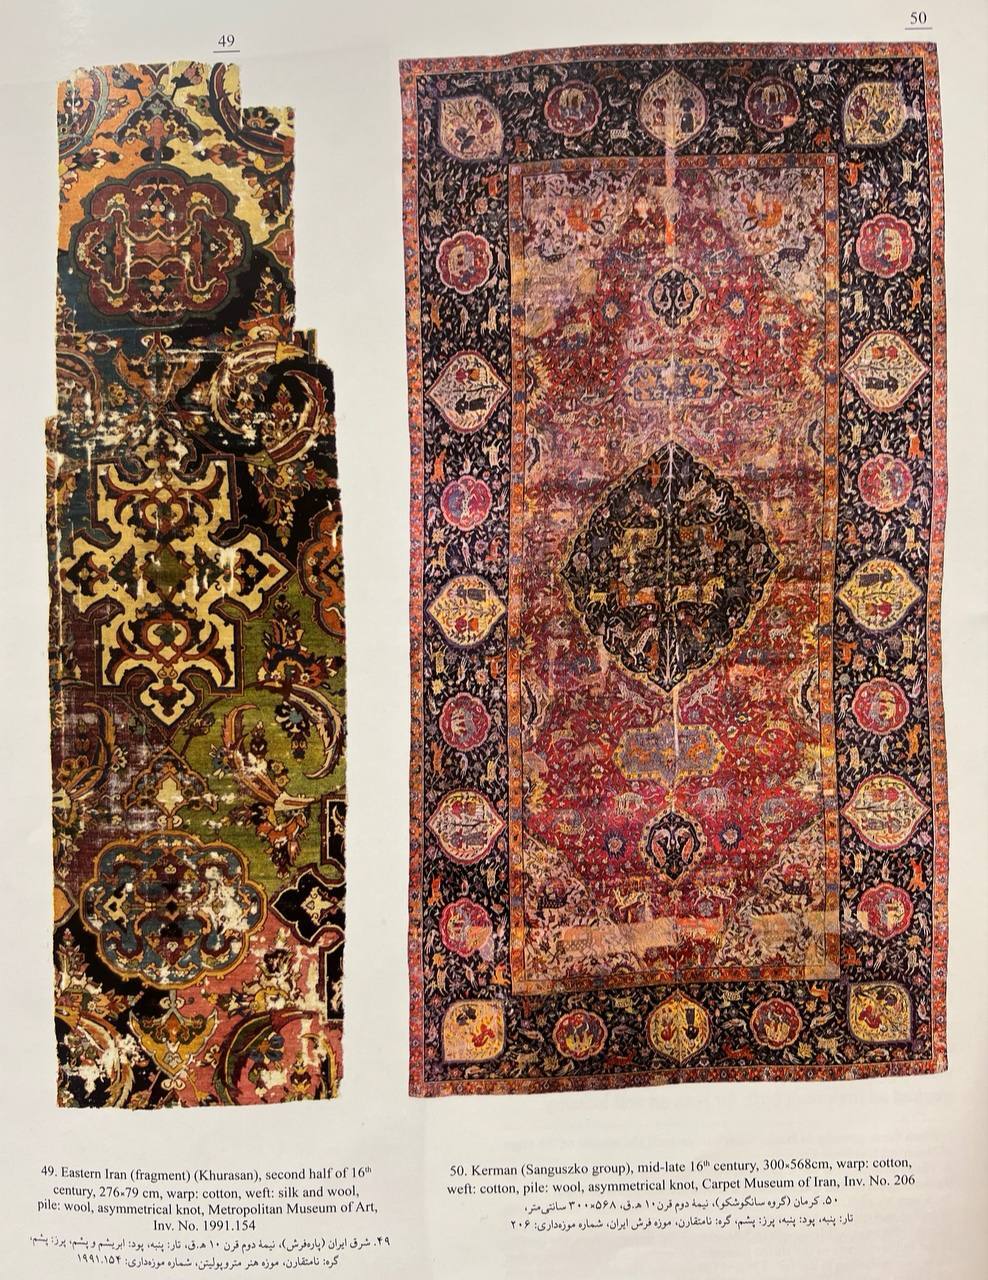 Iranian Carpet in the Safavid era